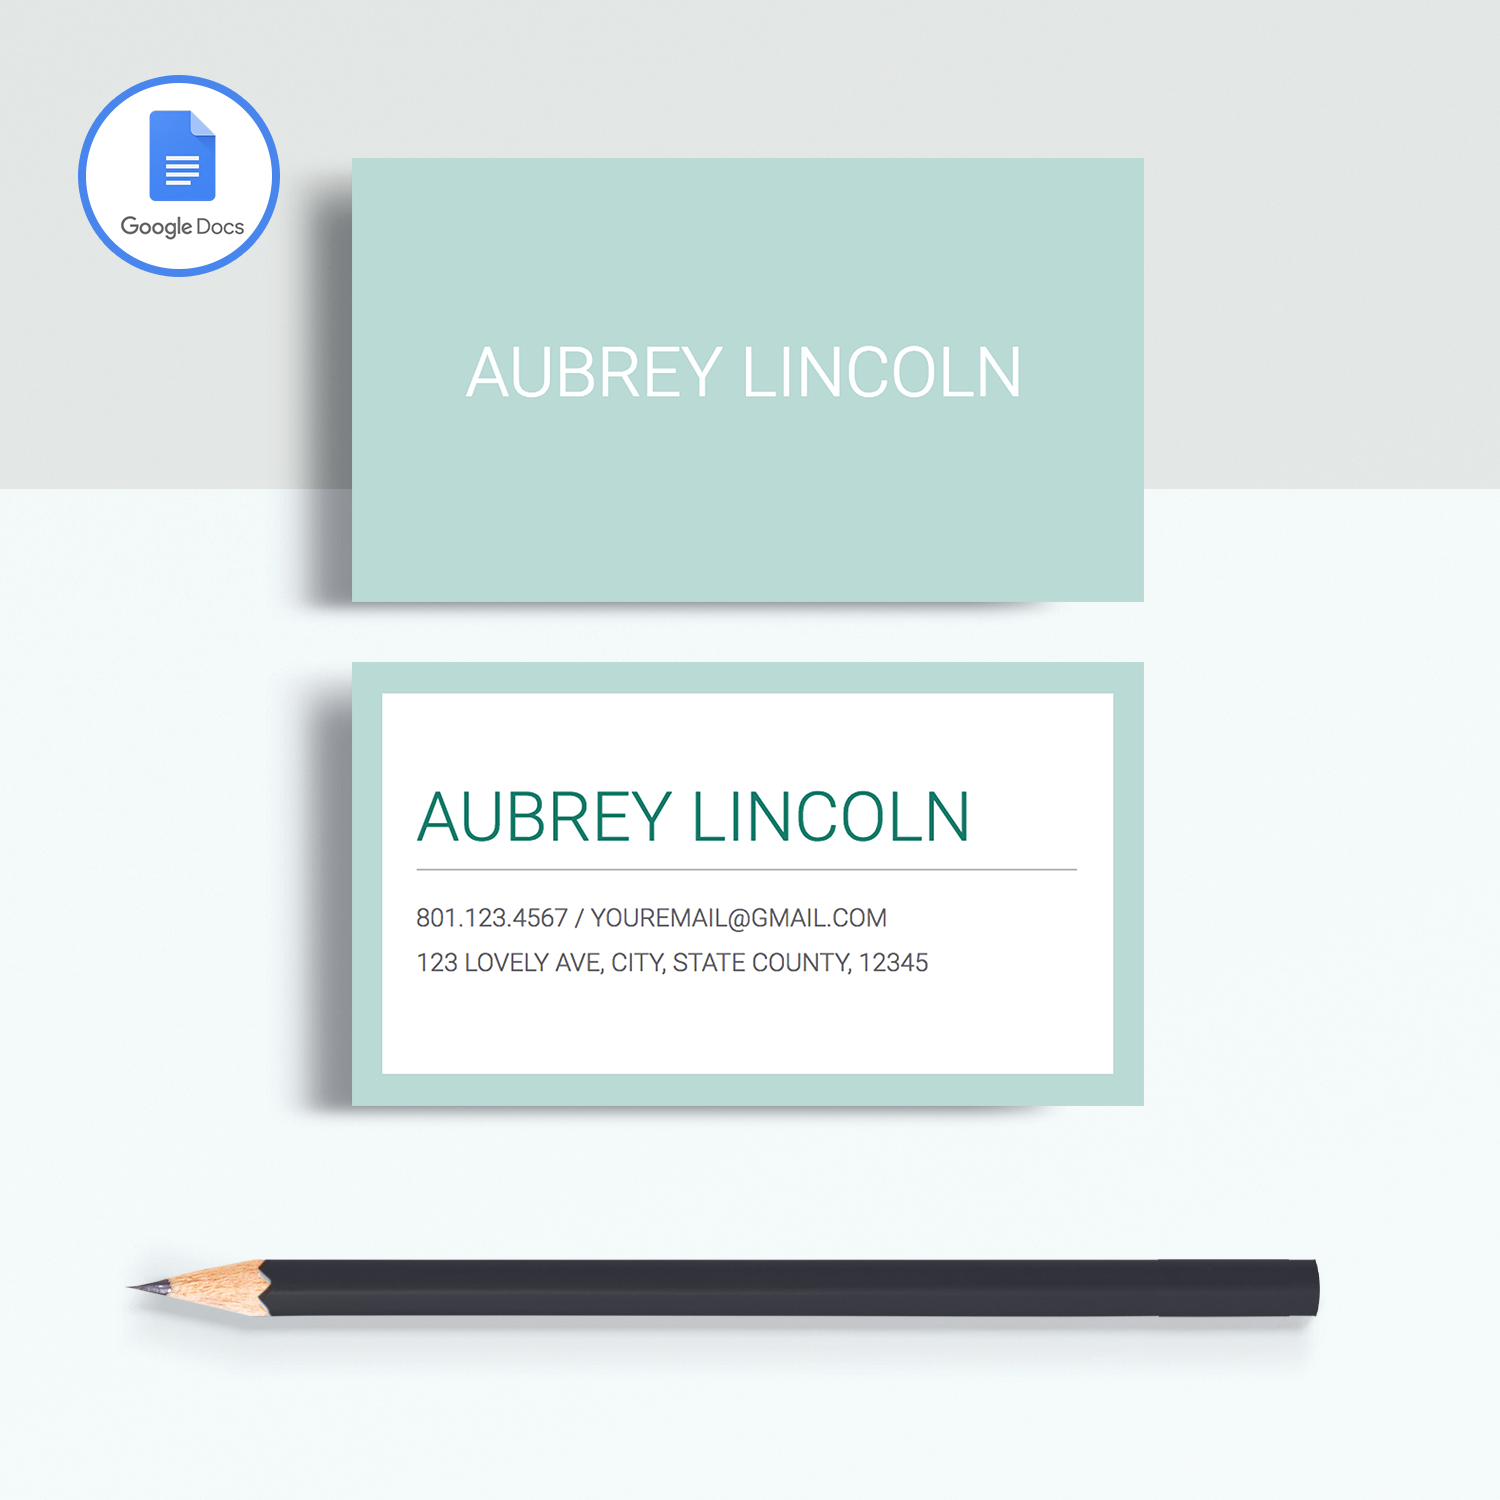 Aubrey Lincoln | Google Docs Professional Business Cards Template - MioDocs